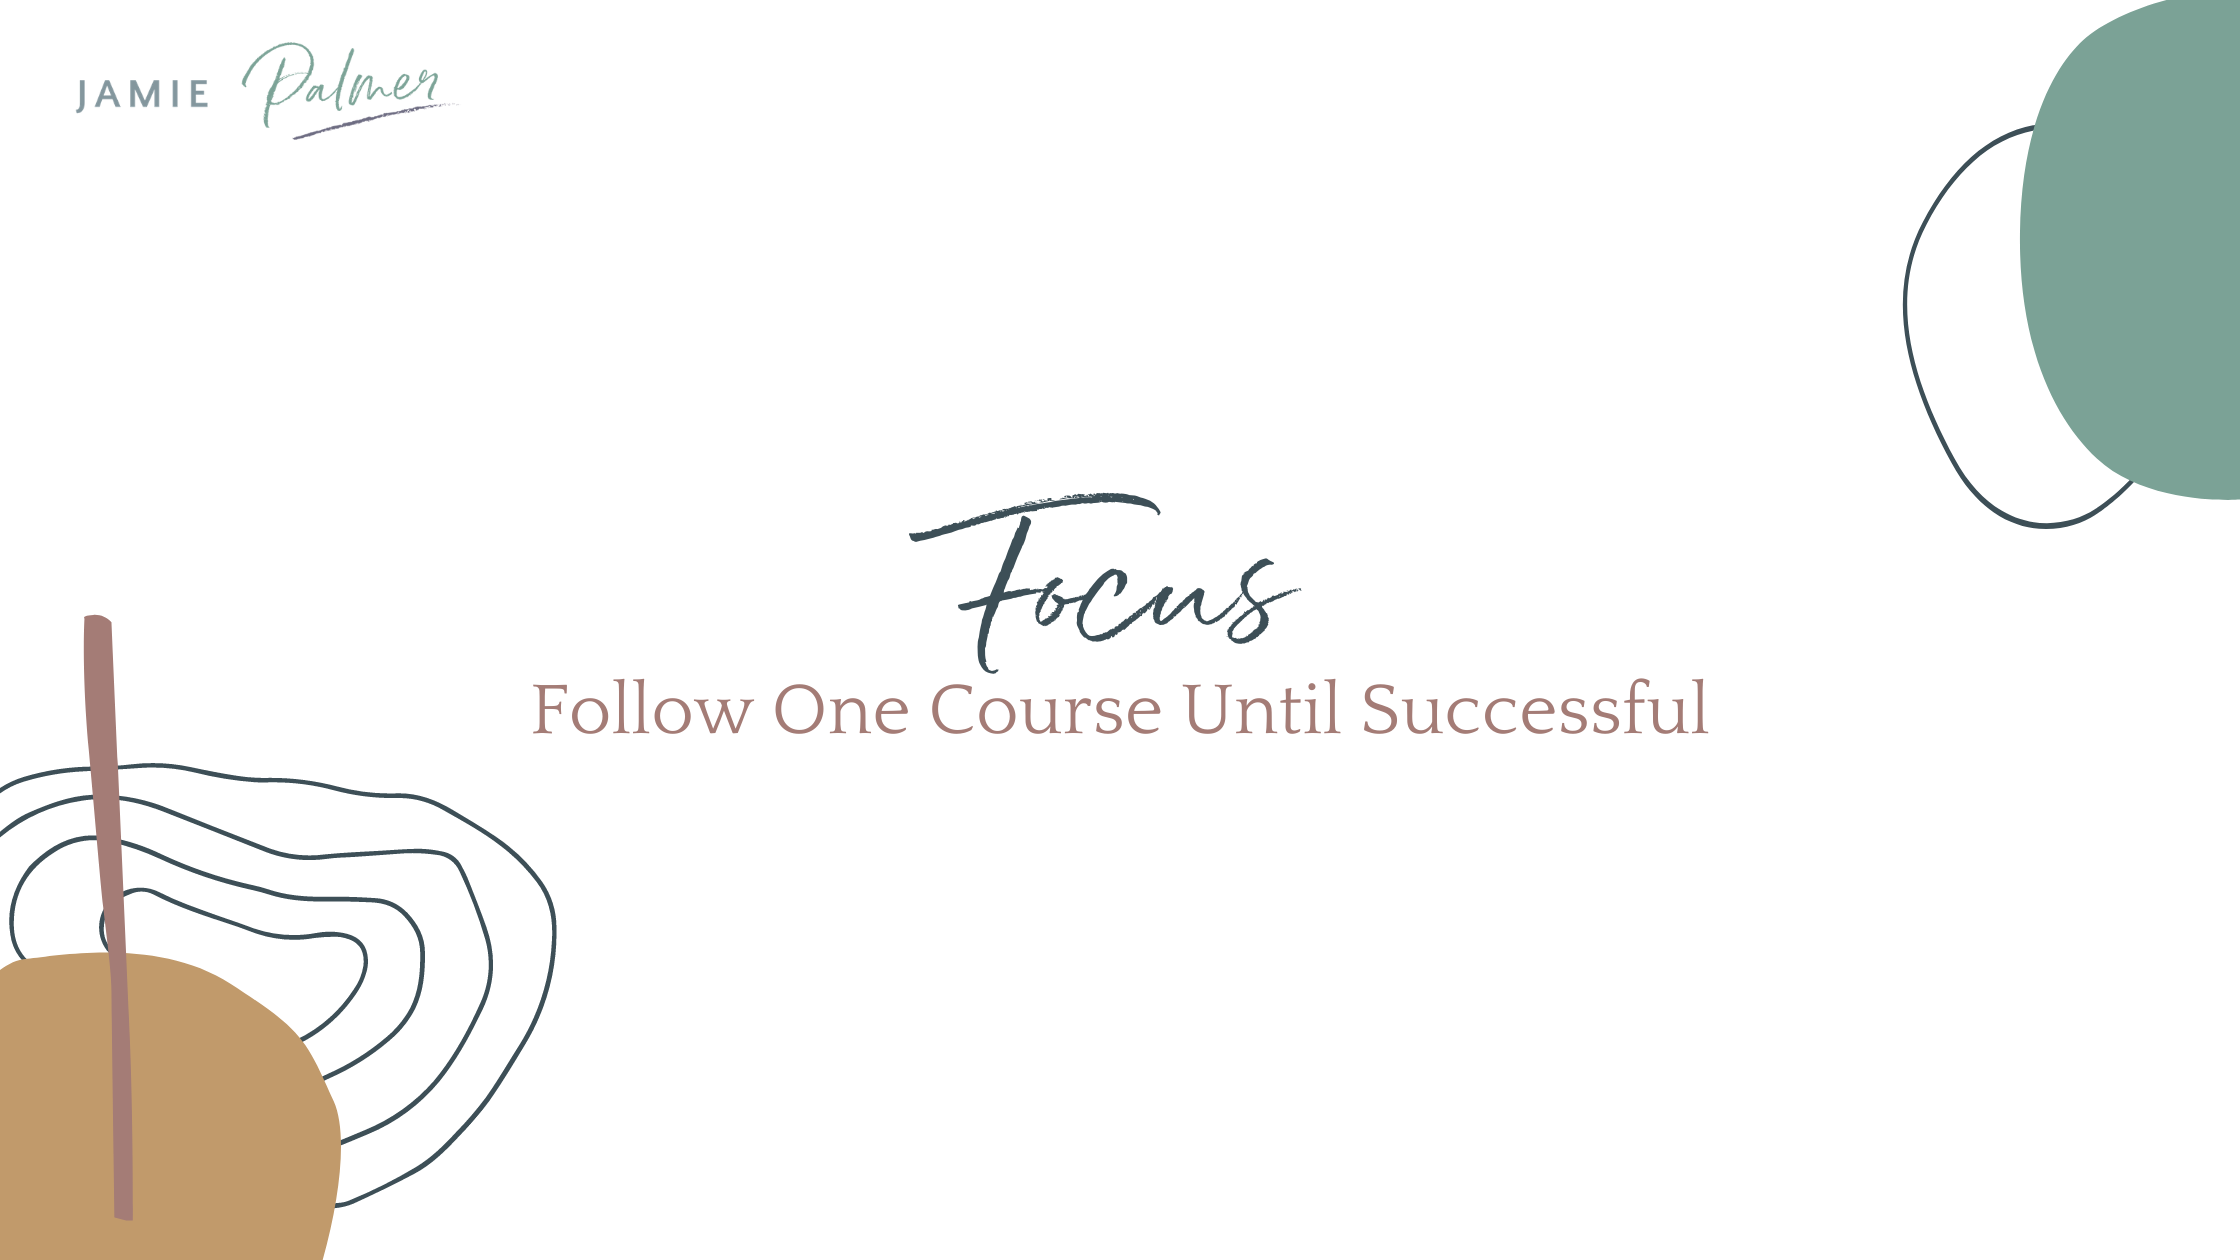 Focus follow one course until successful